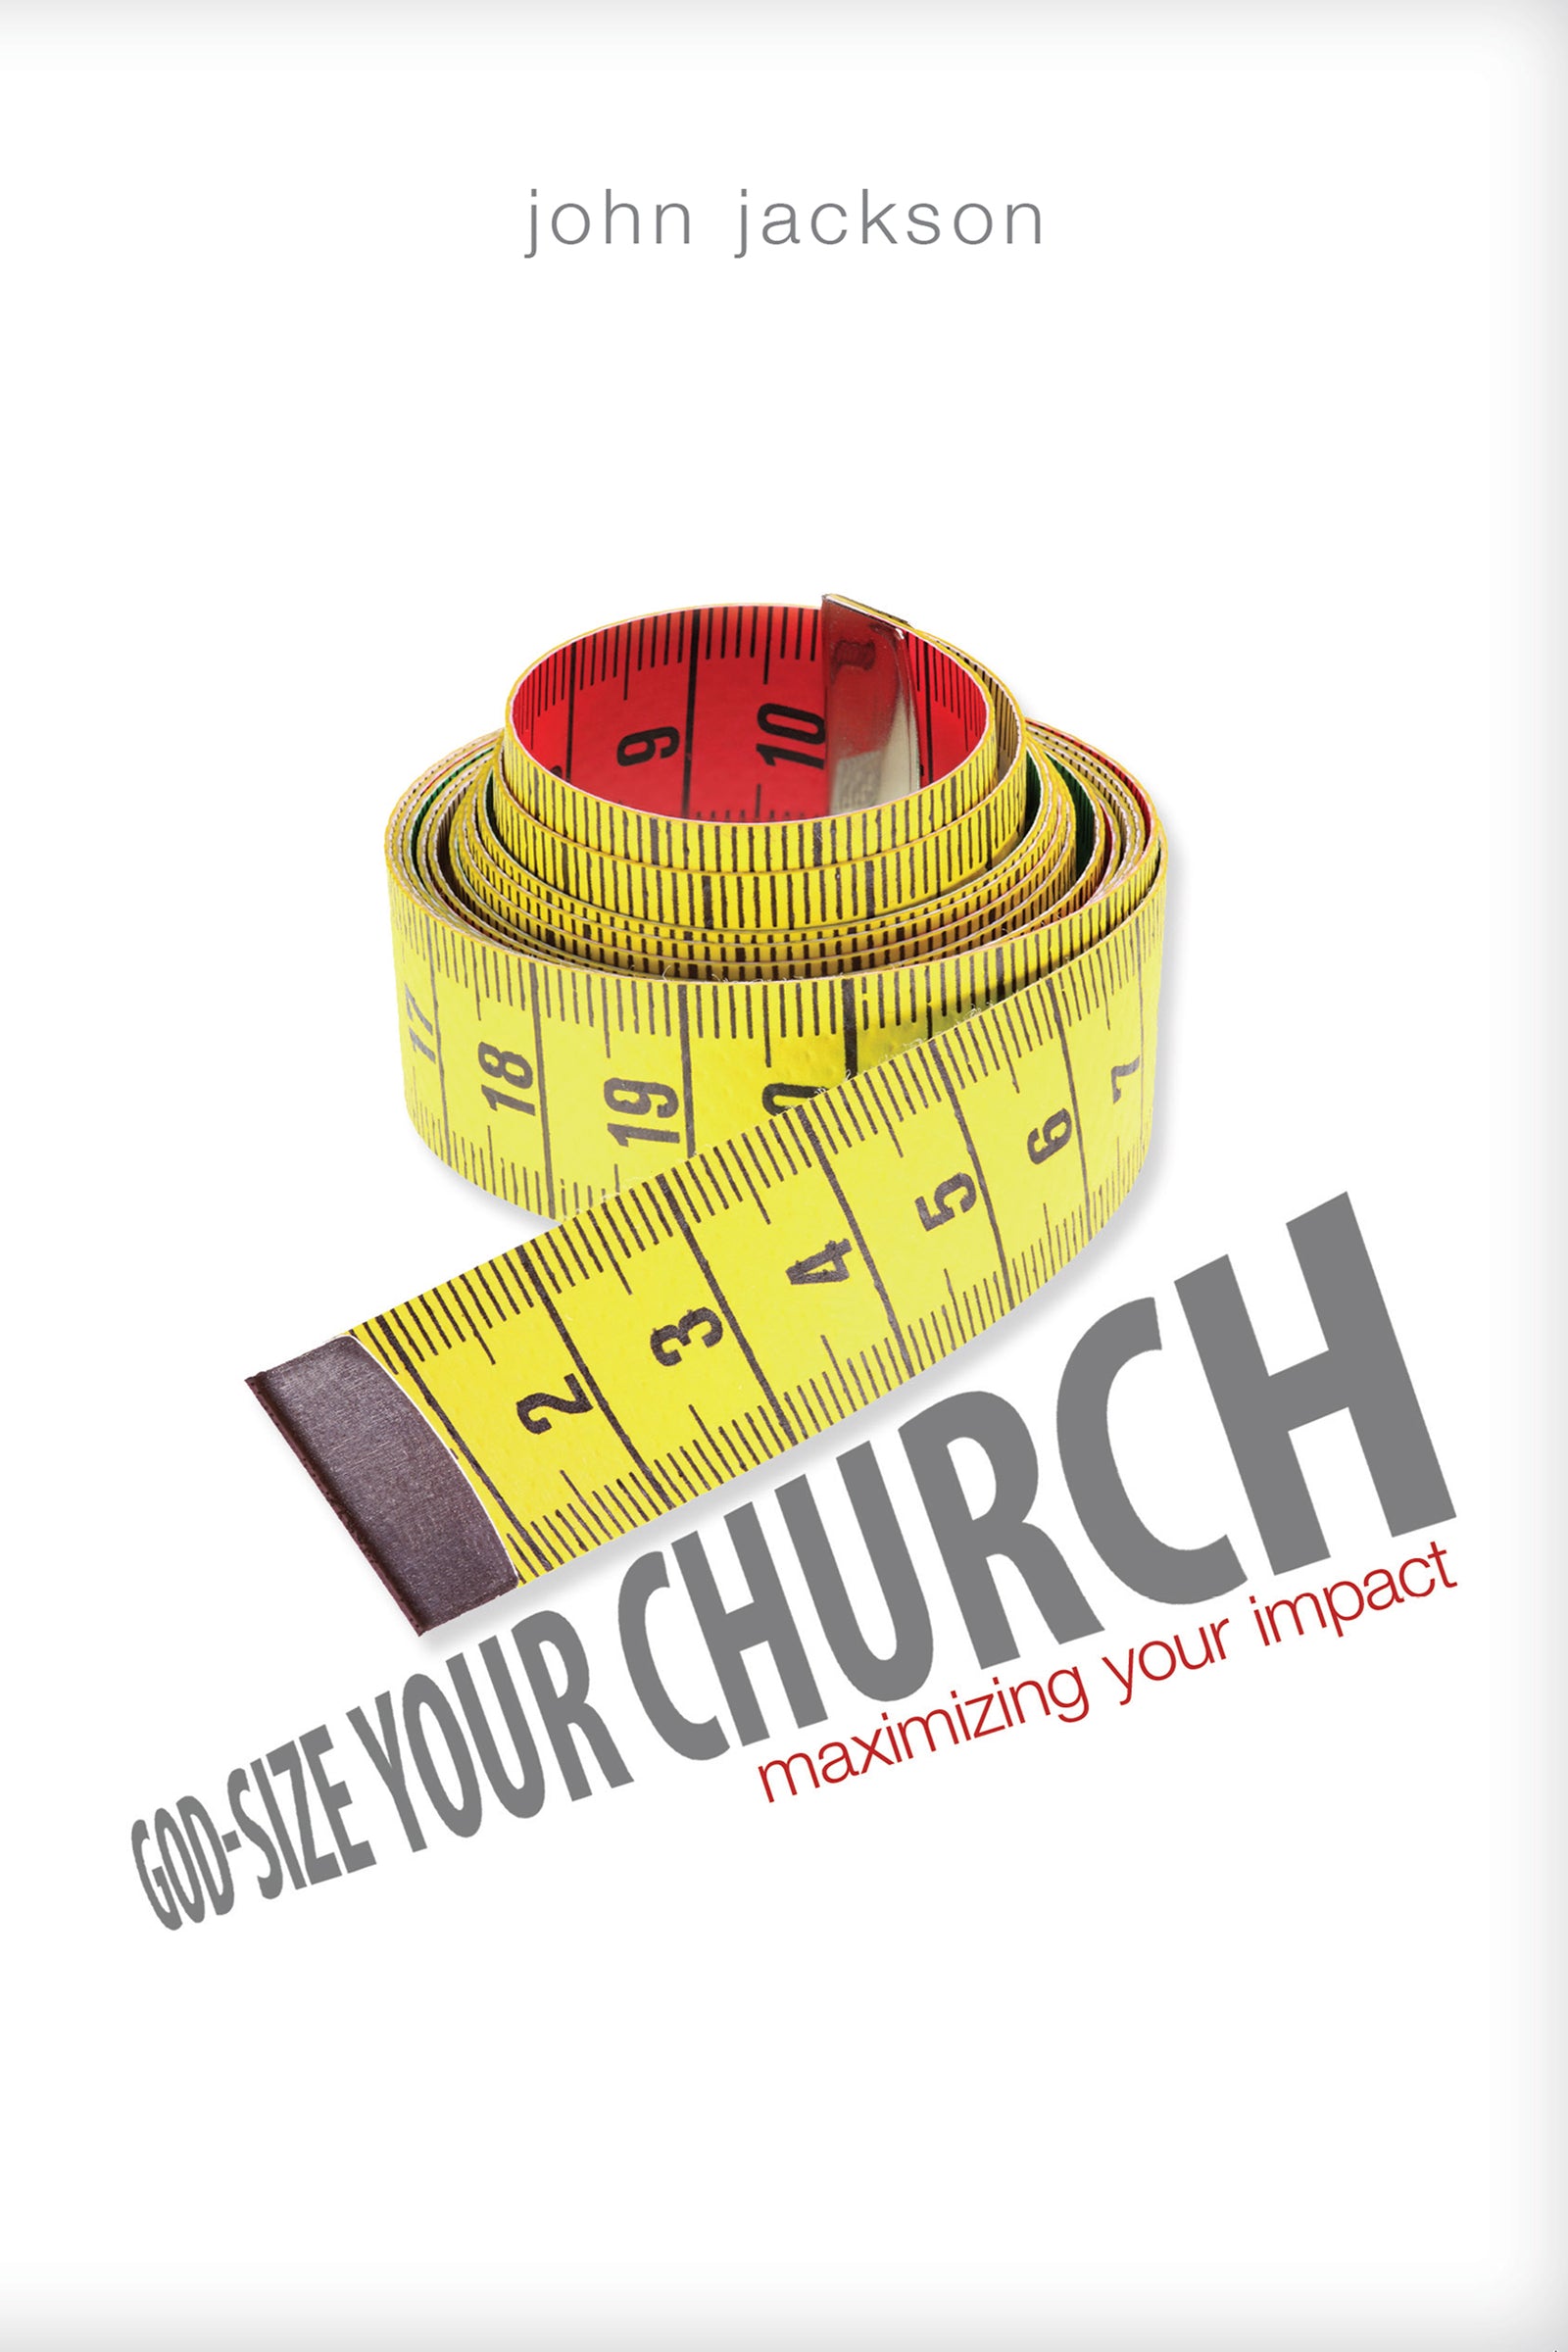 God-Size Your Church